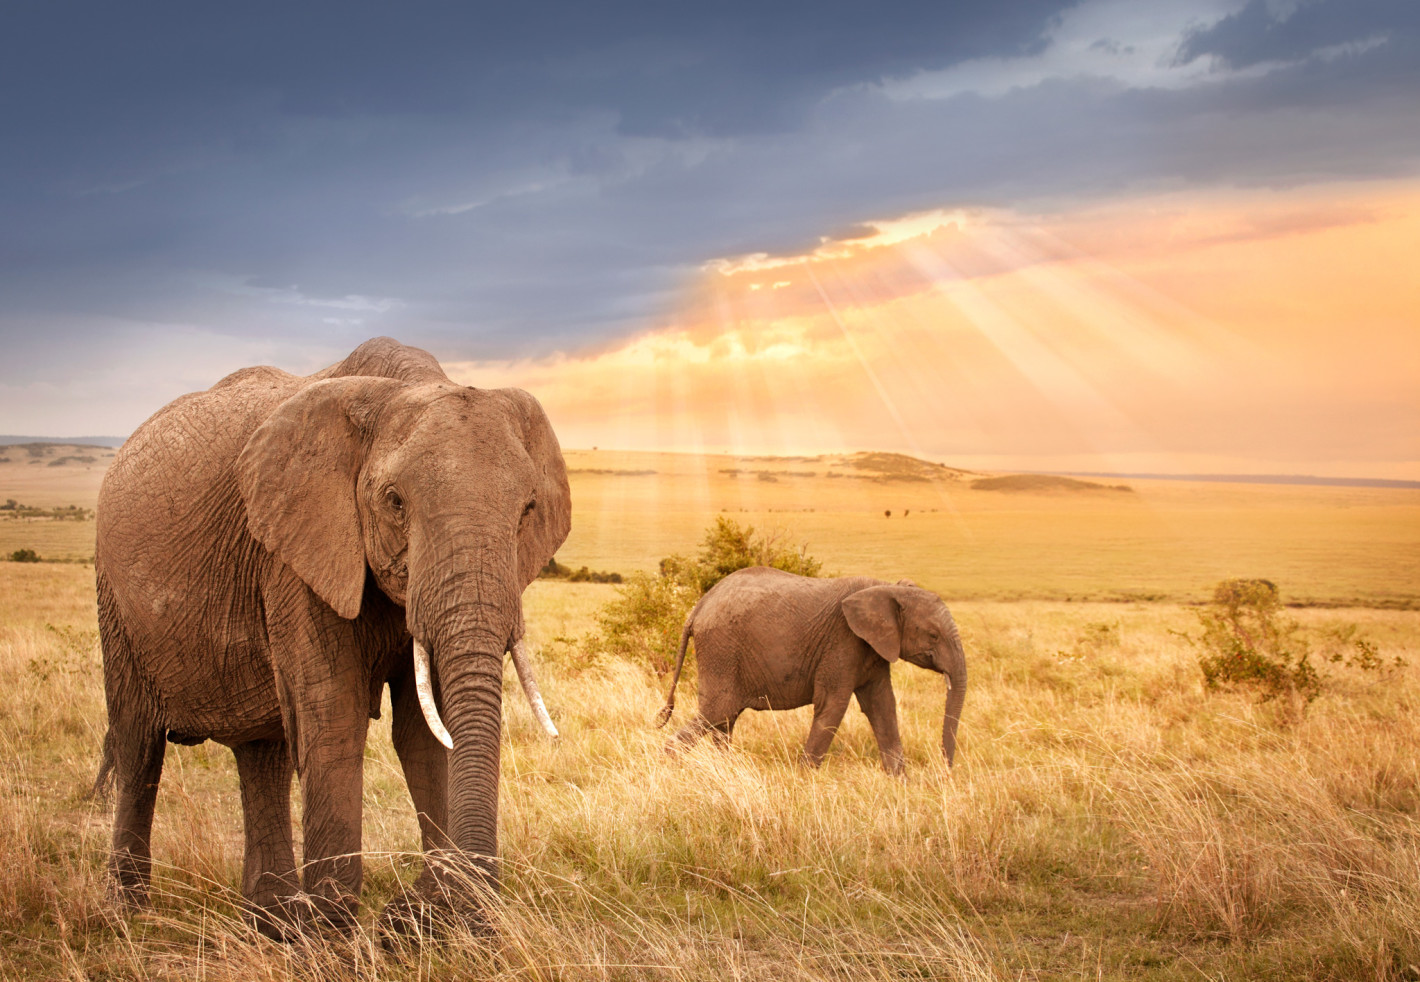 Elephants_walking_Grassland_Sunset